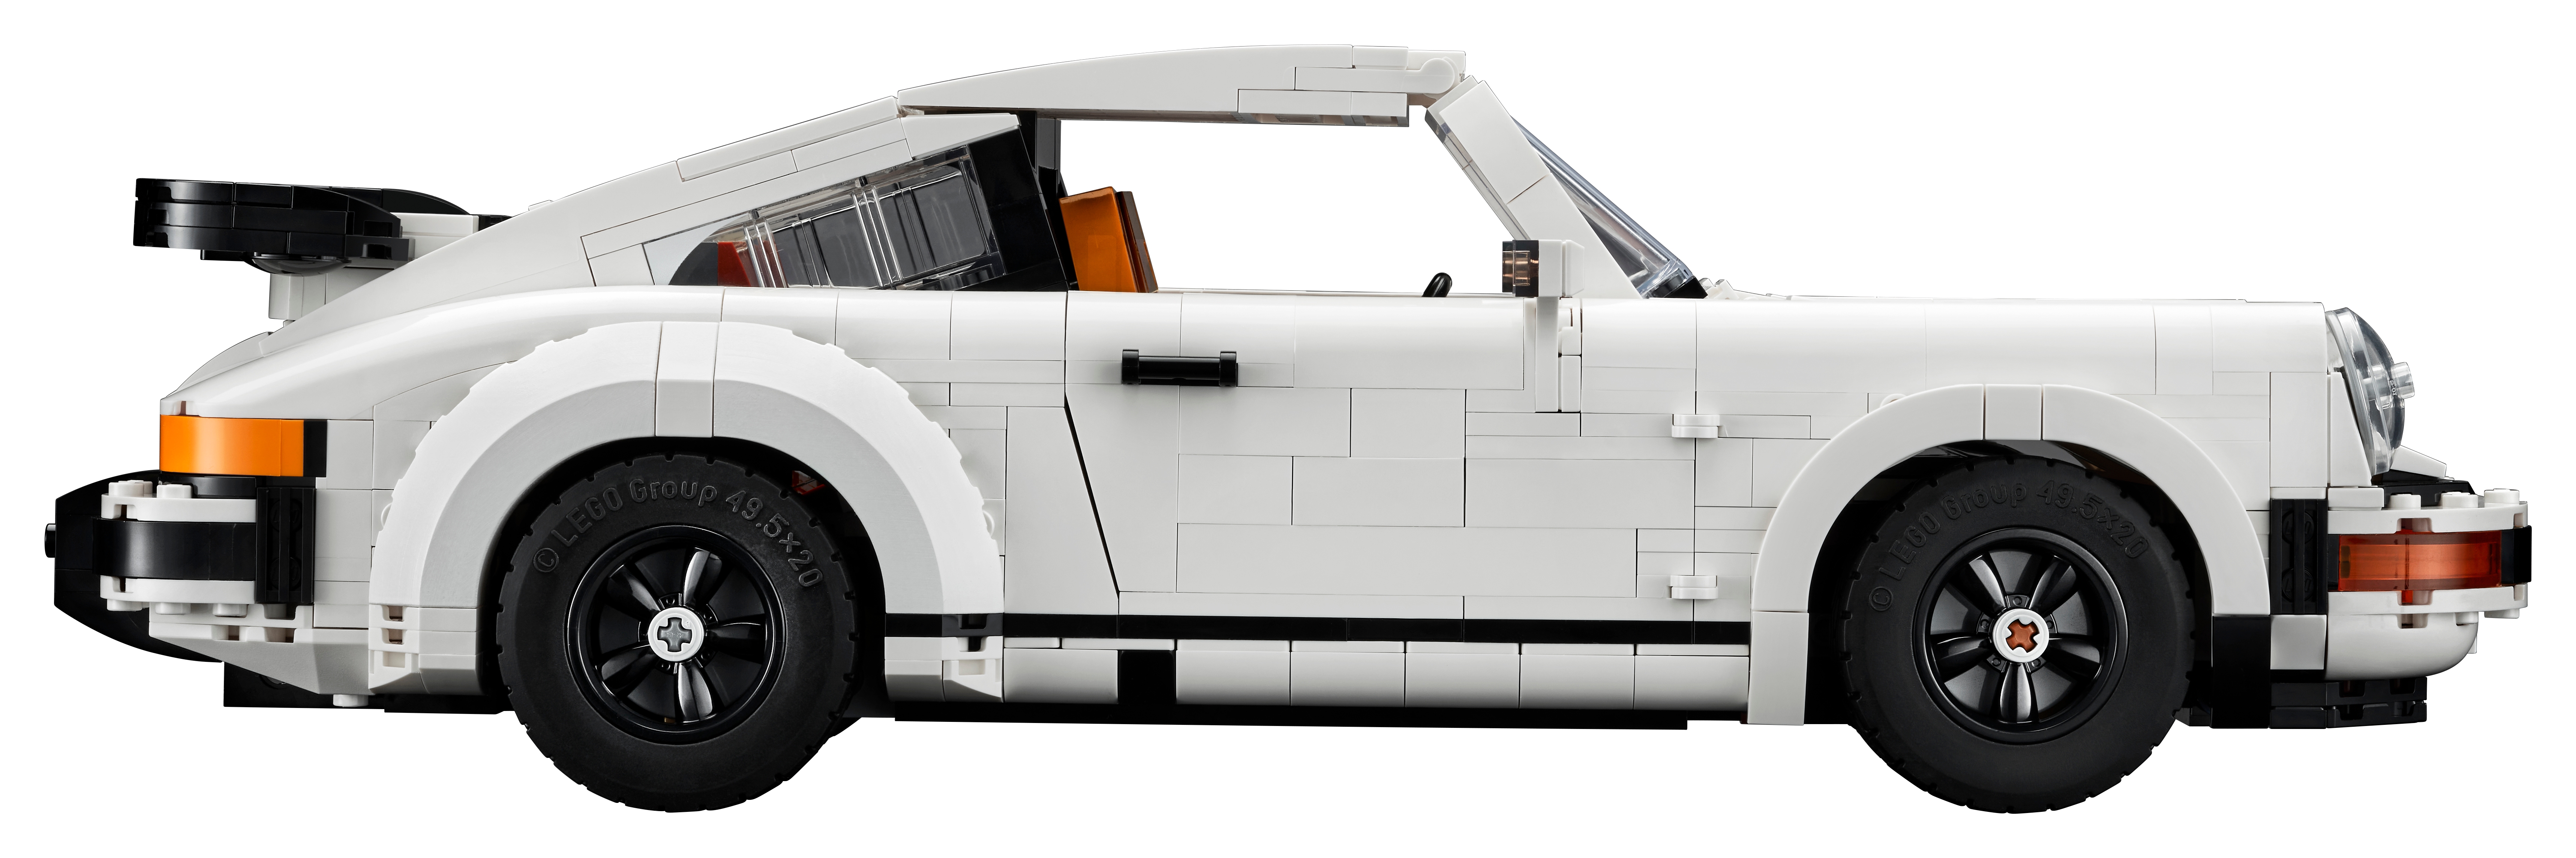 Porsche Full-Size LEGO 911 Turbo